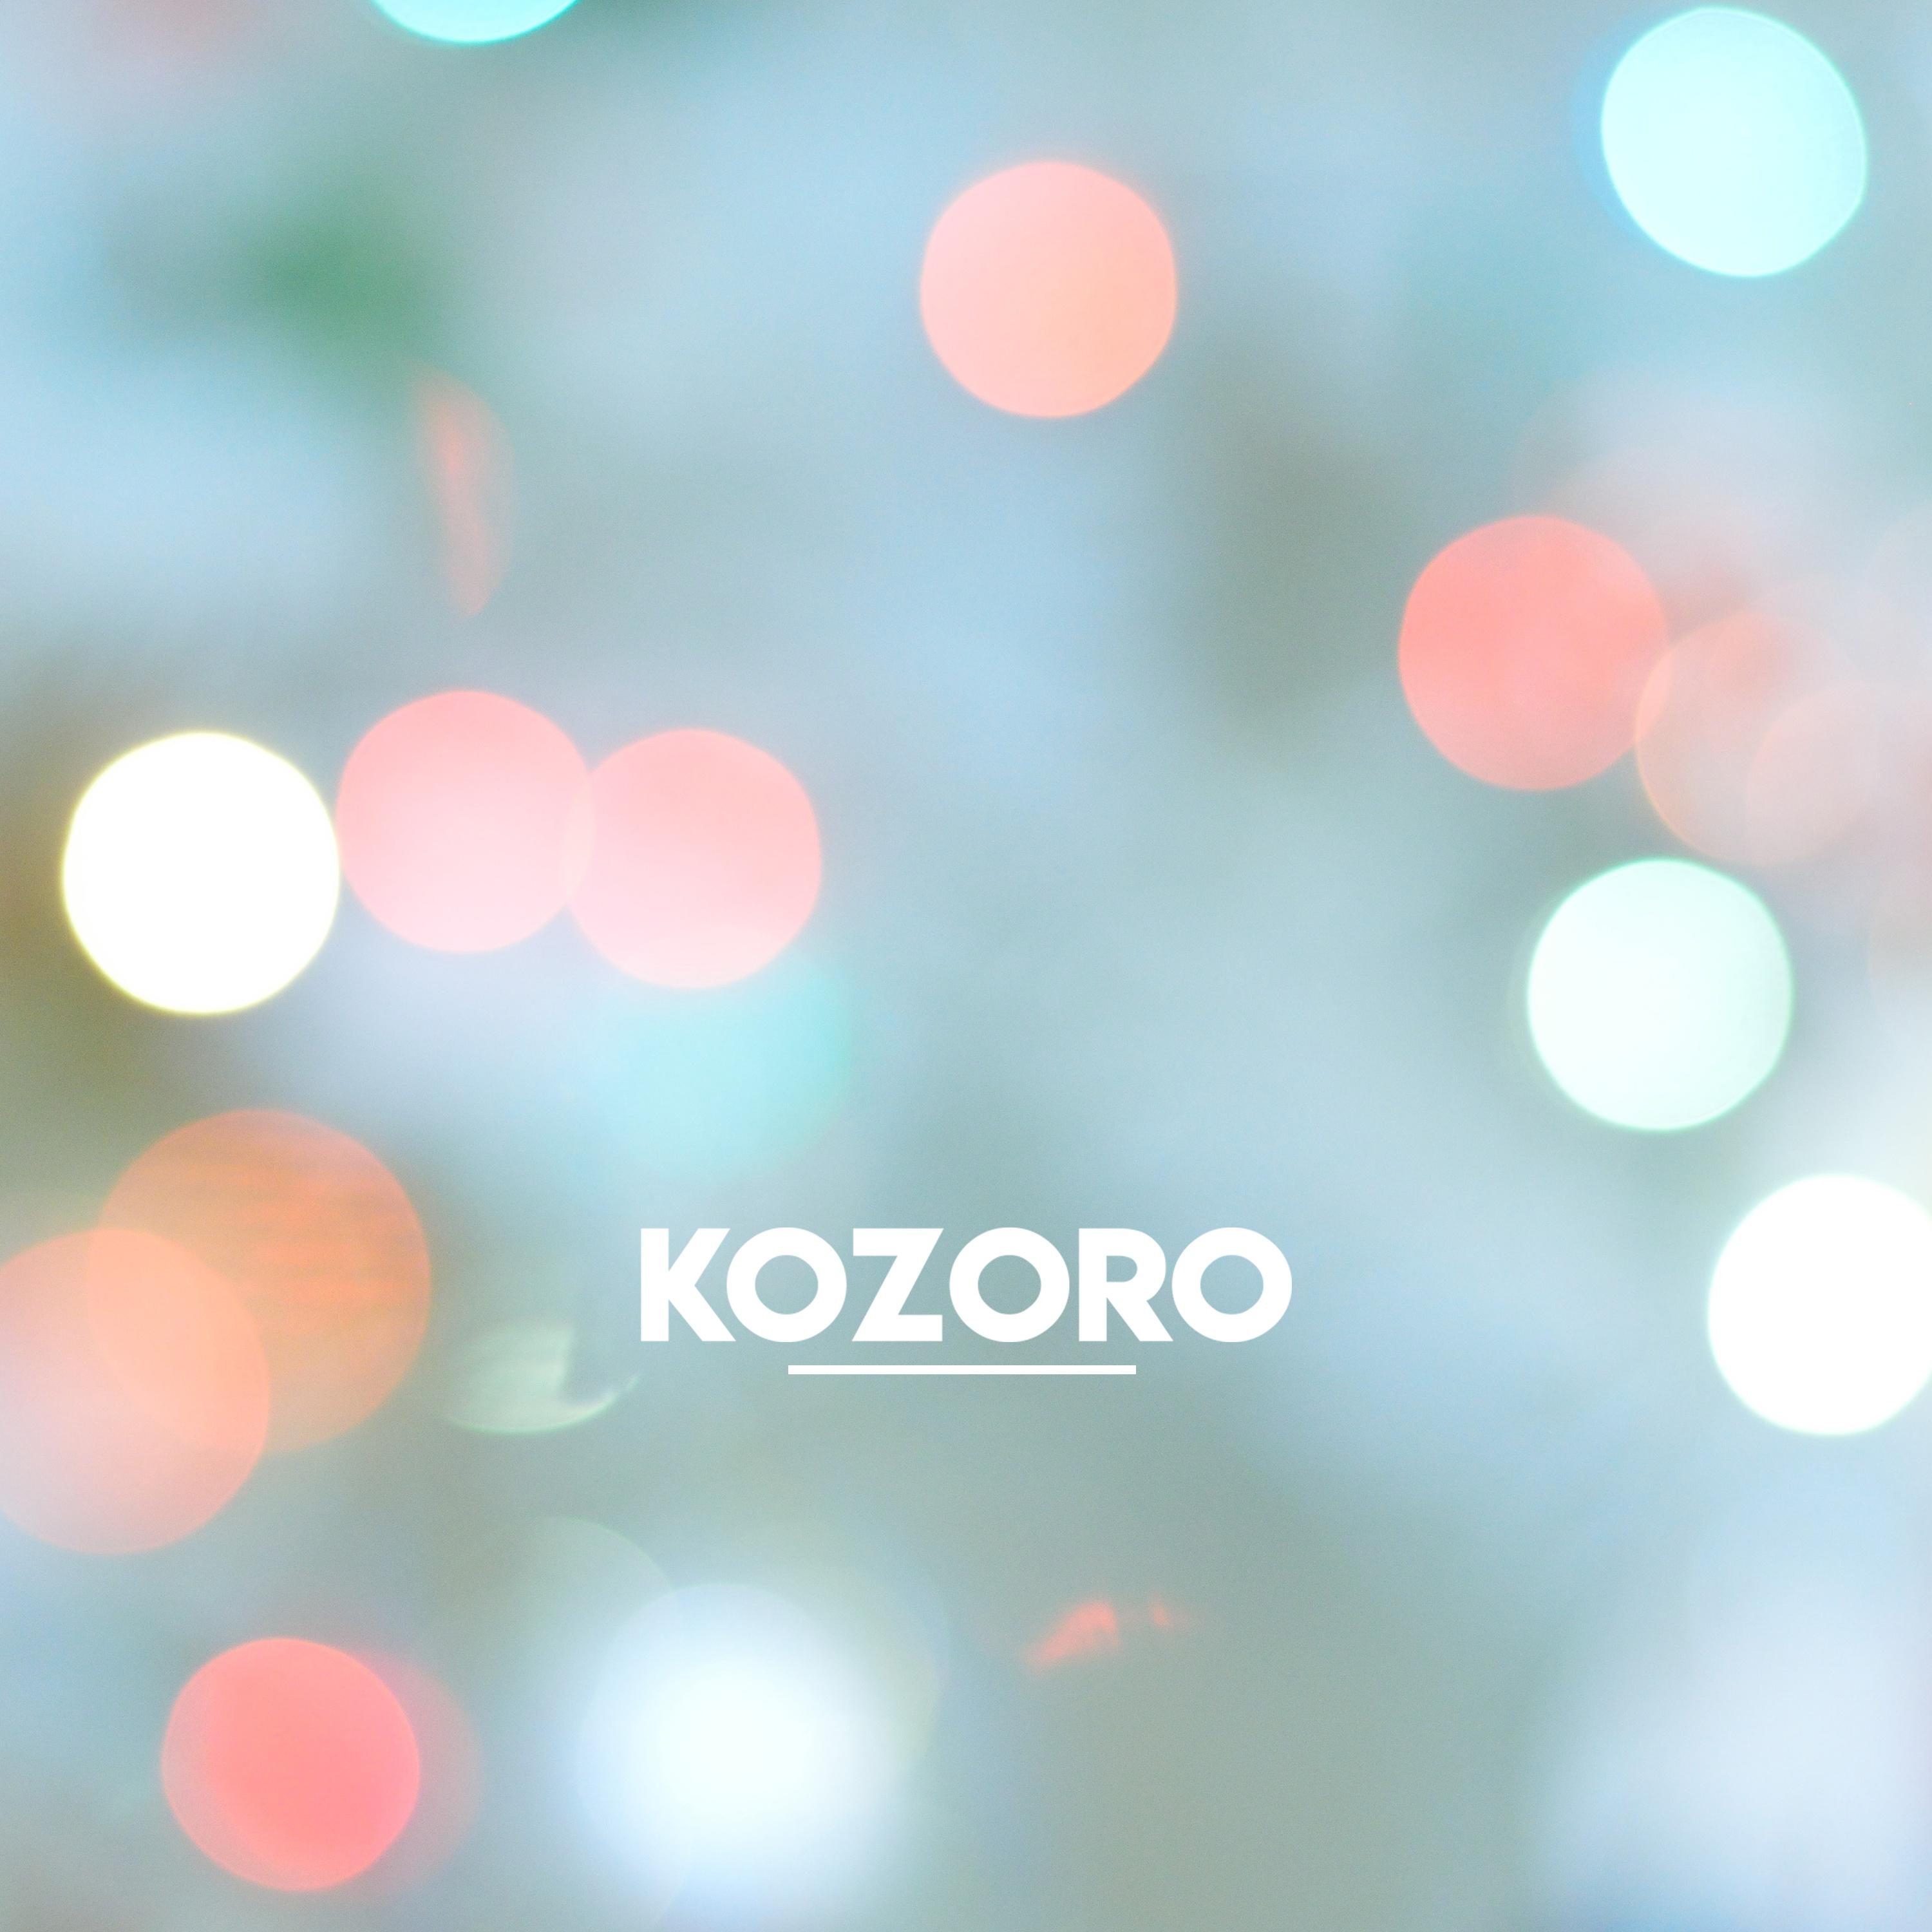 Kozoro - For Us